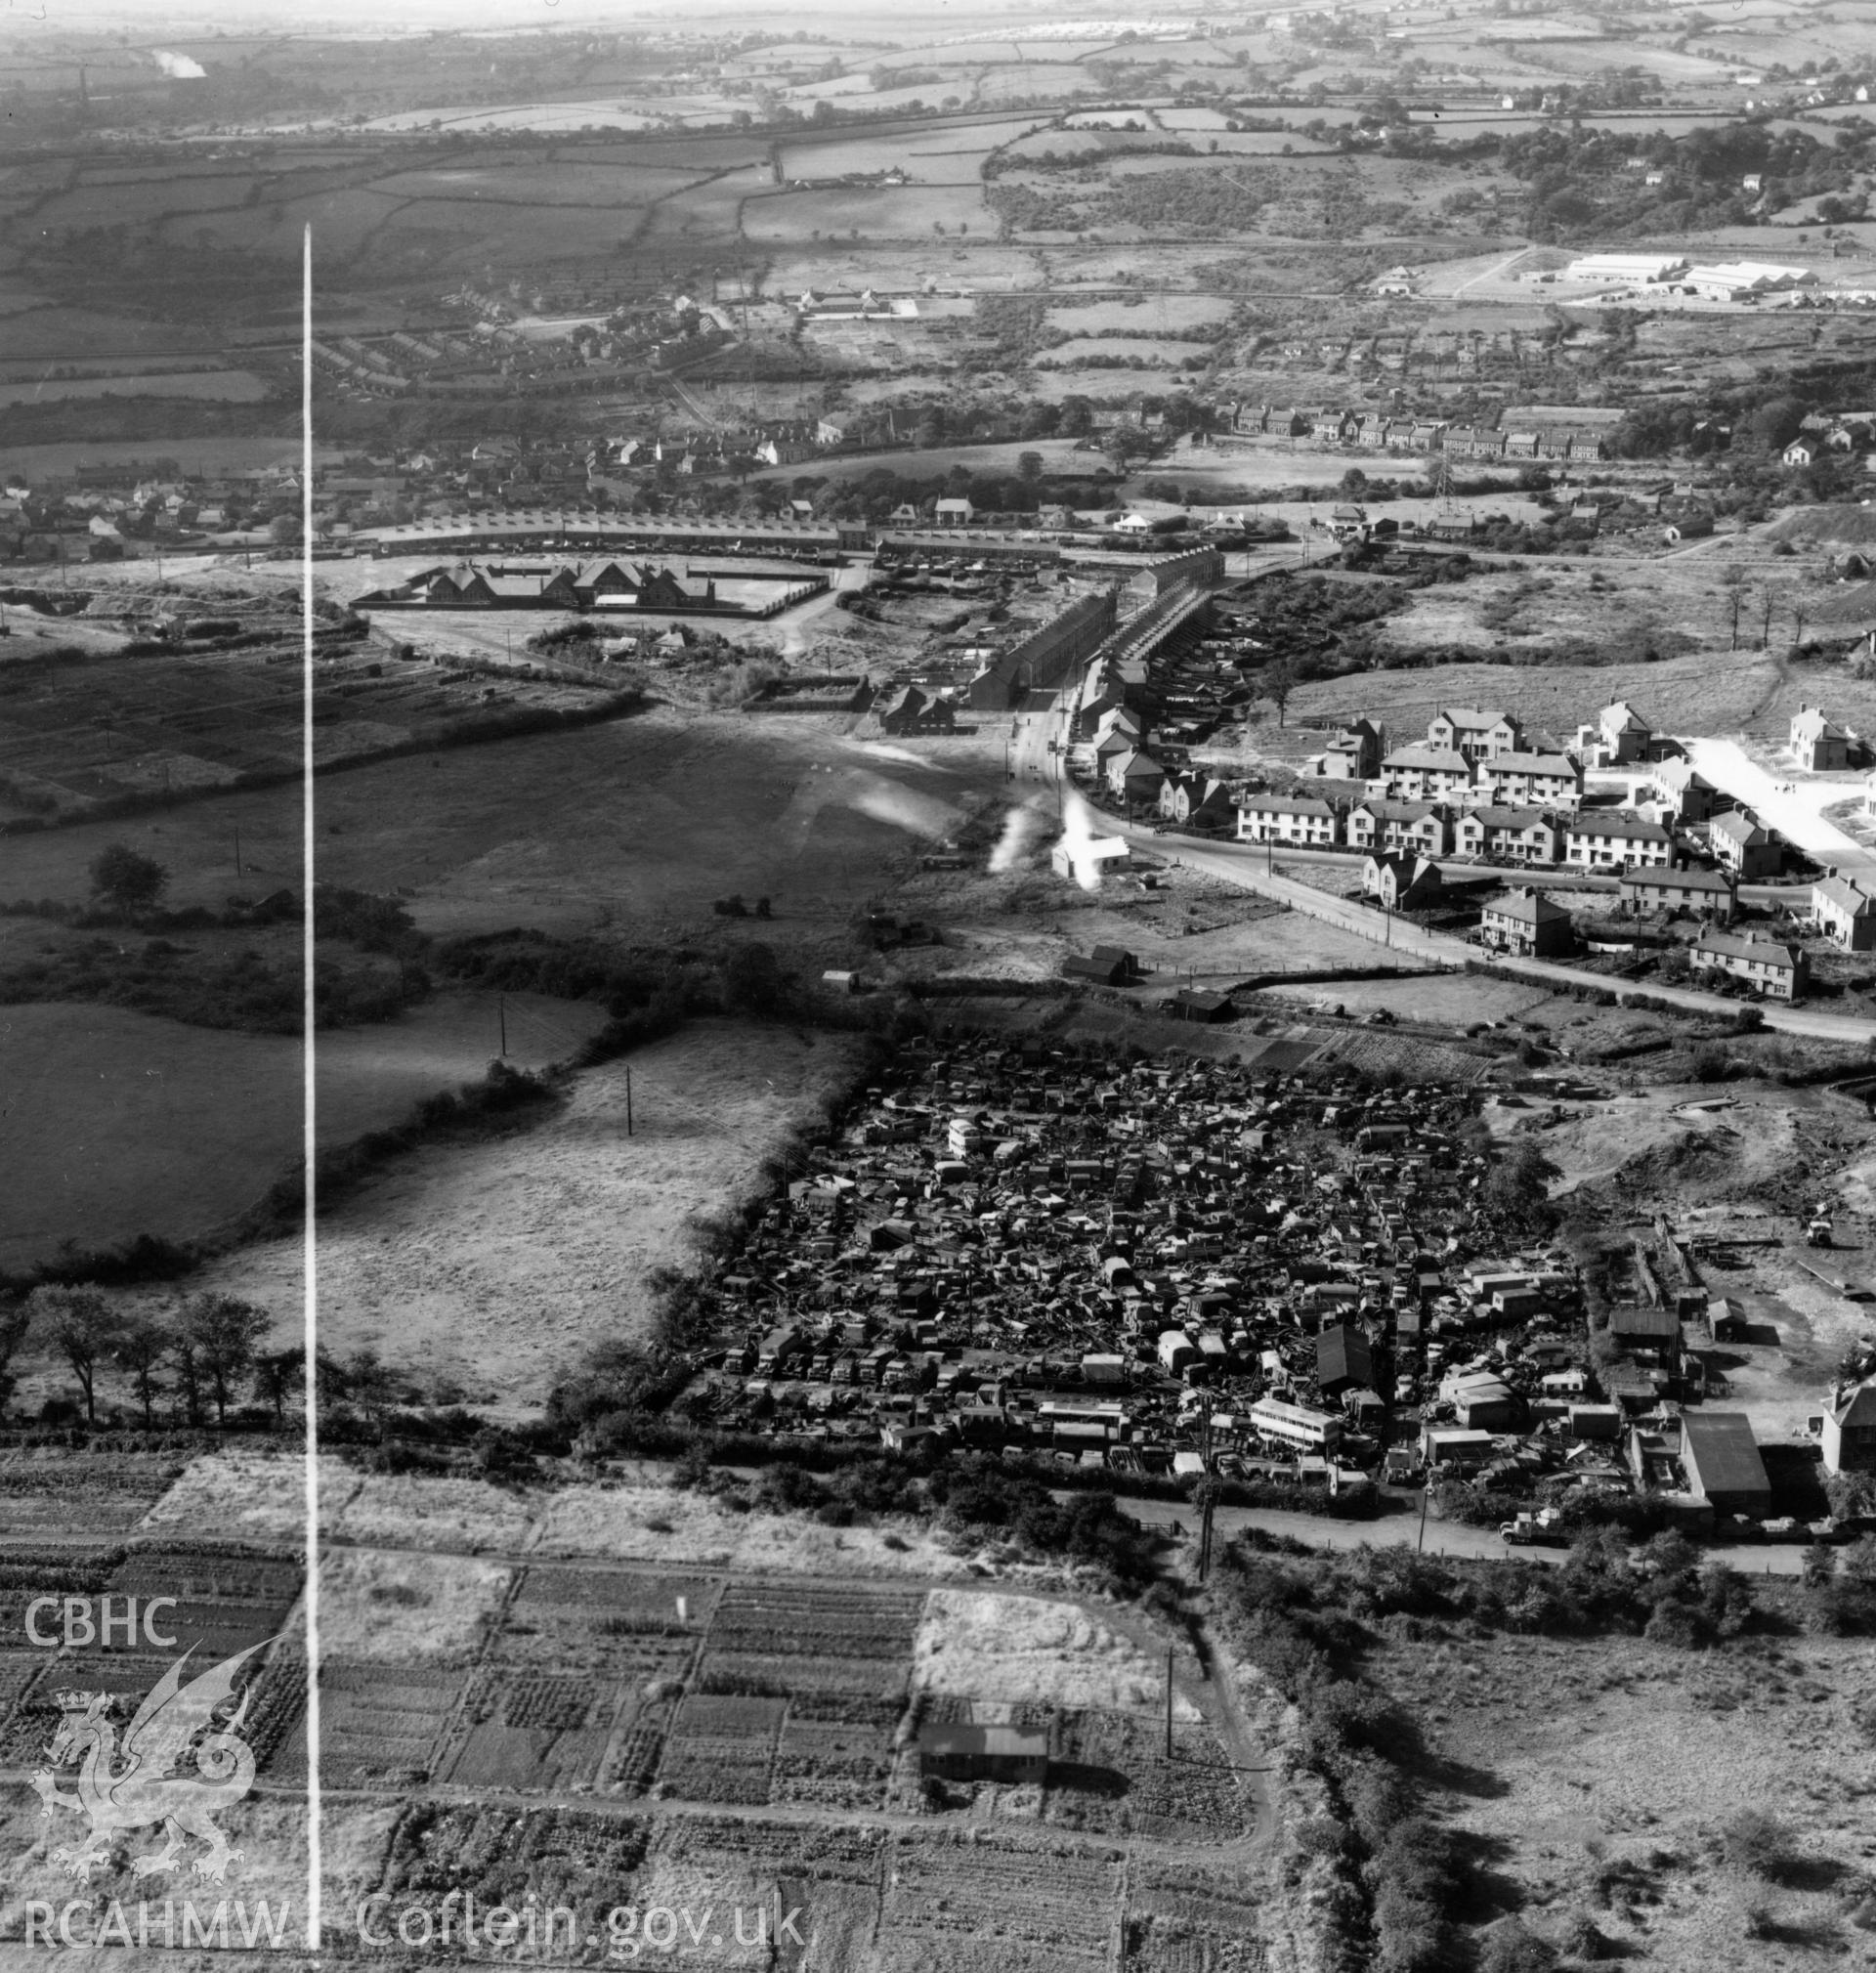 View of Gibbs Brothers vehicle scrap yard at Blackwood, Mynyddislwyn. Oblique aerial photograph, 5?" cut roll film.